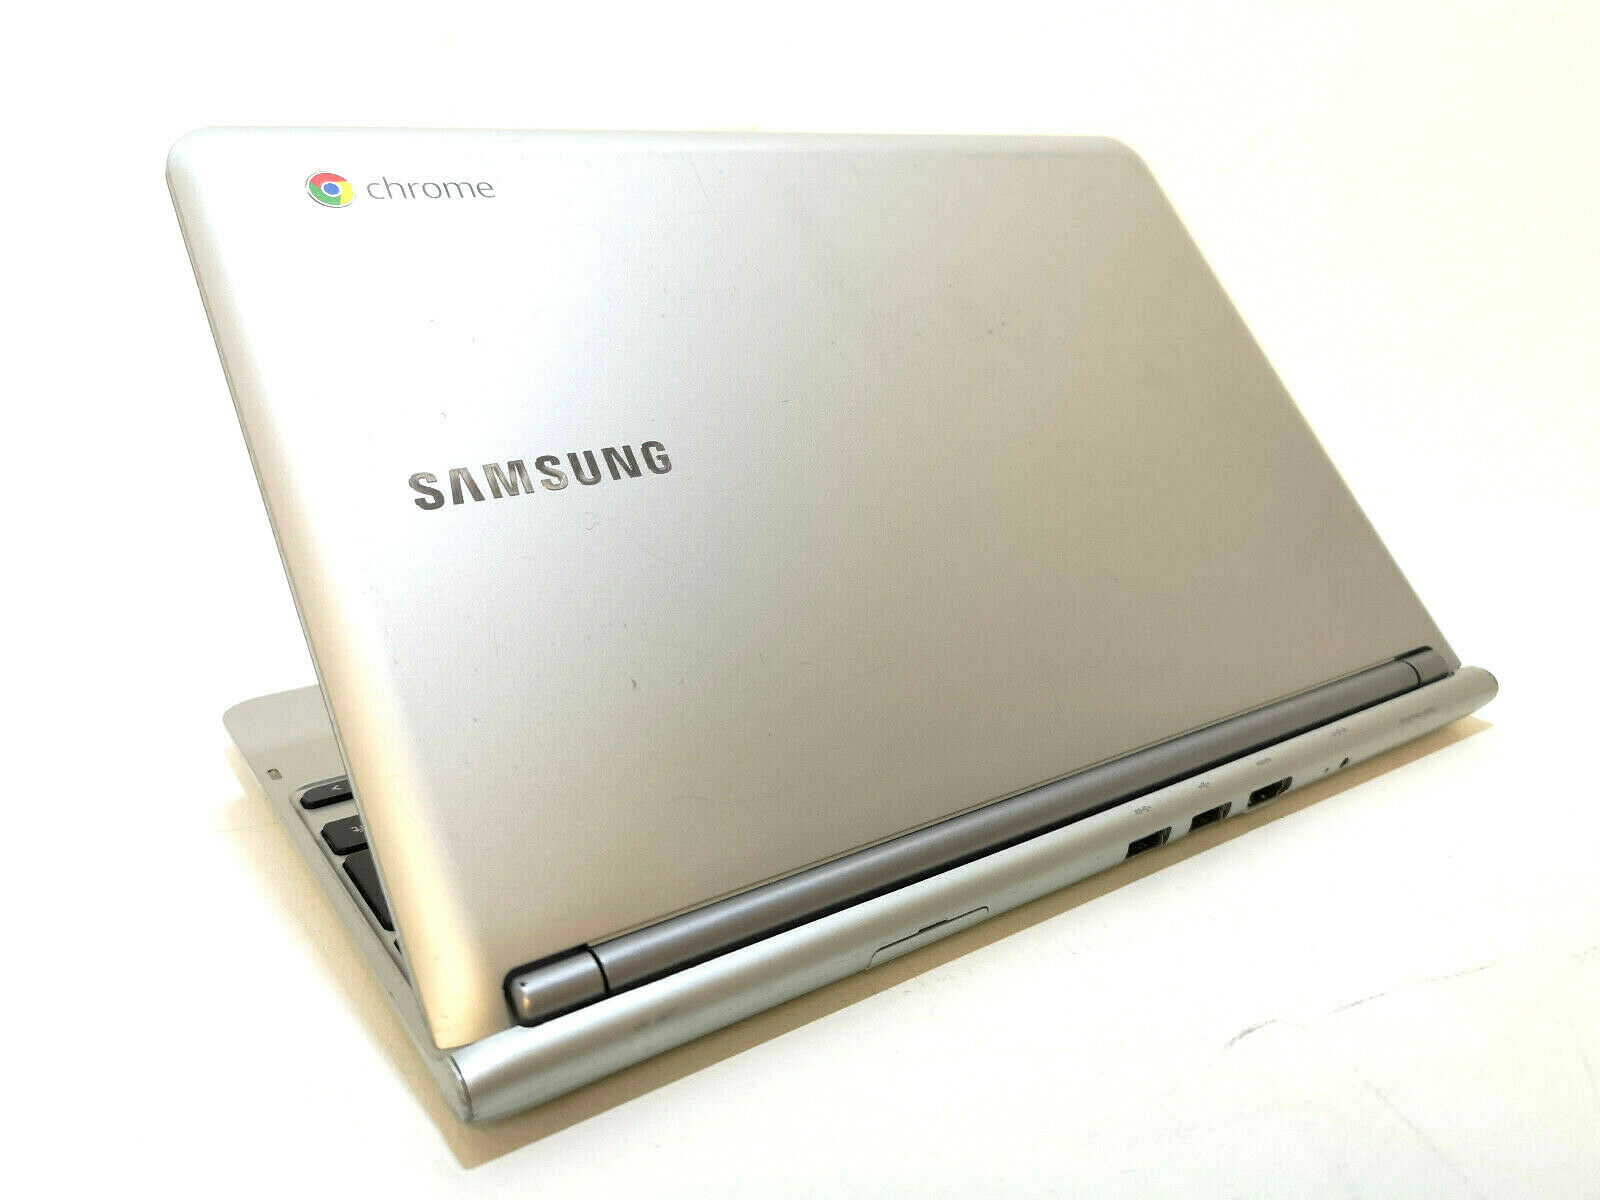 Samsung ChromeBook XE303C12